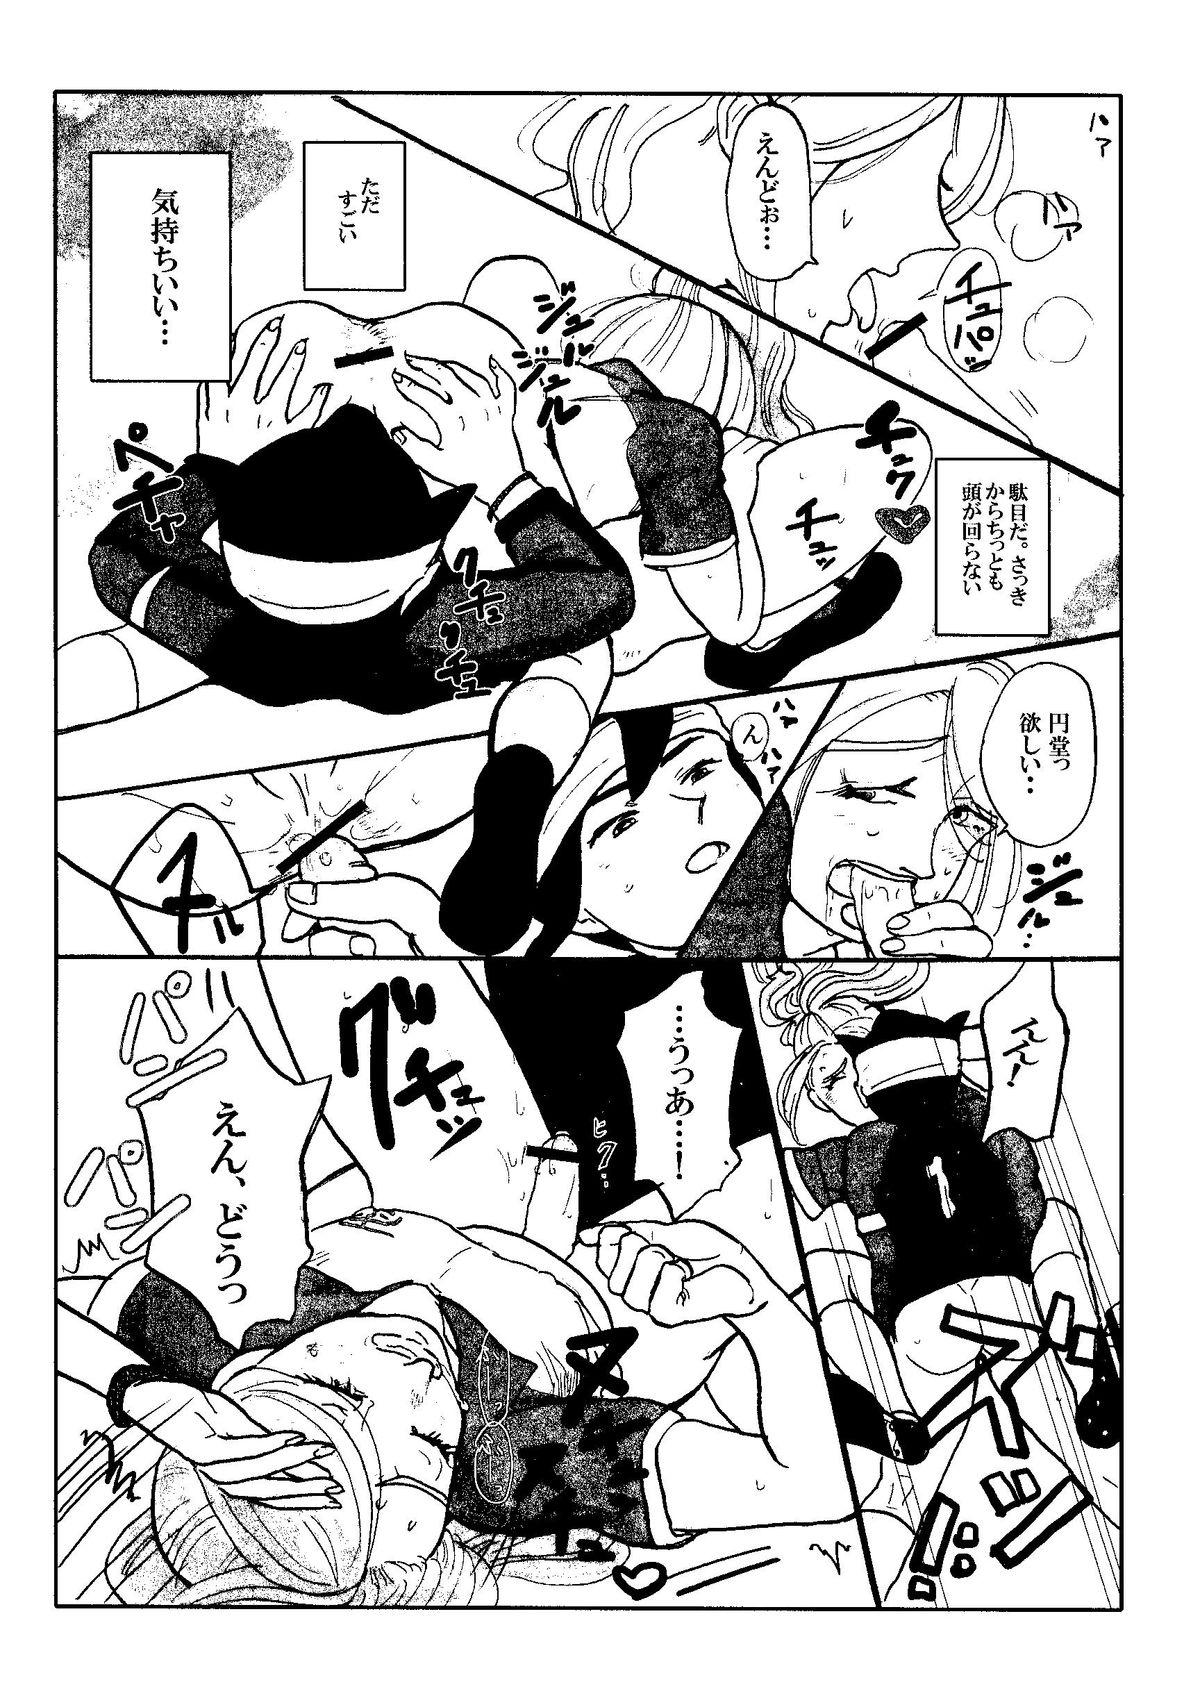 Jeune Mec Kirigakure Takaya (Aniki Otokodou) - ×××× Yarouze! (Inazuma Eleven) - Inazuma eleven Bro - Page 11